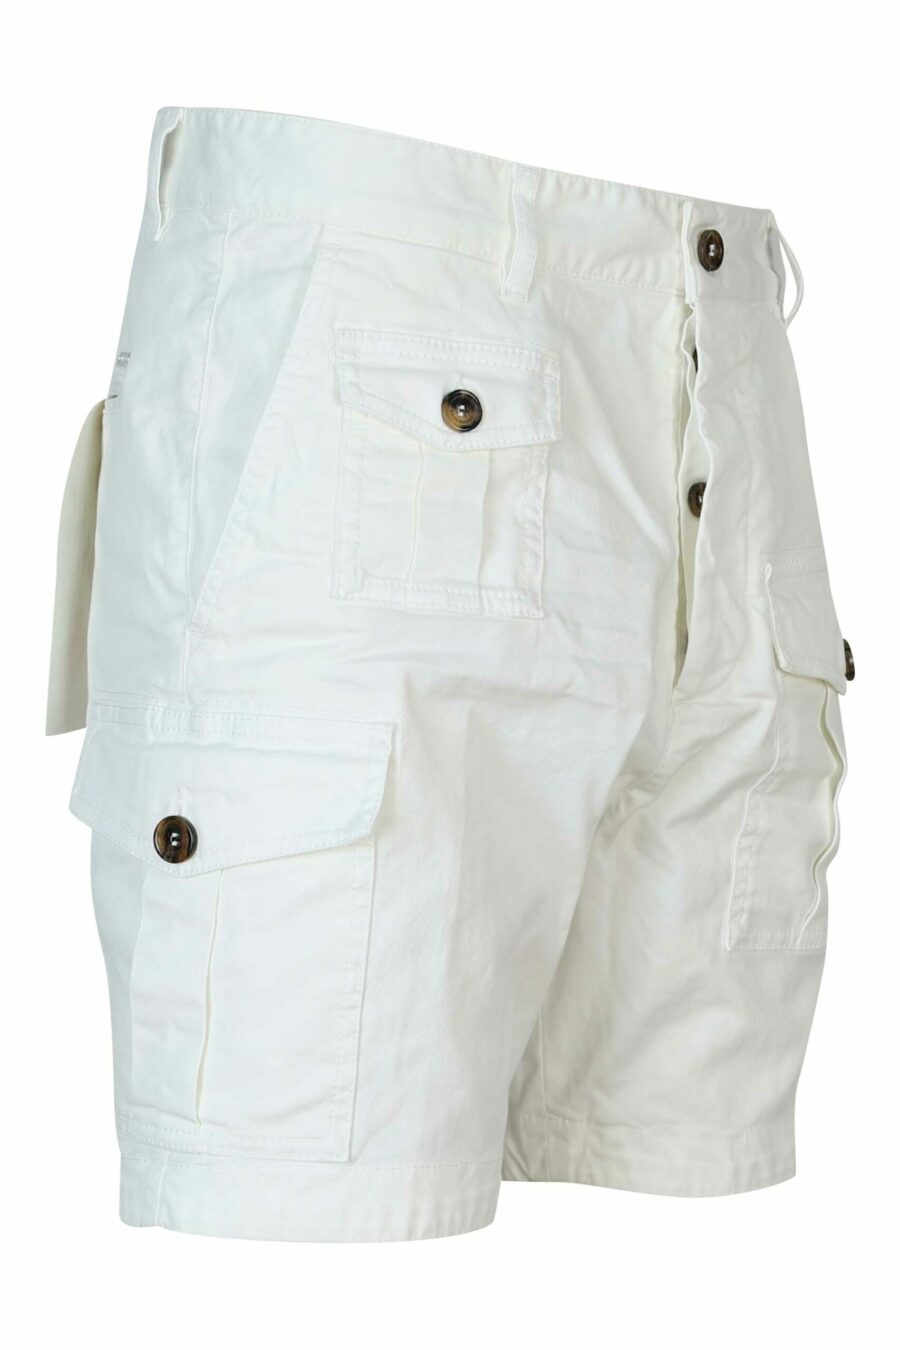 White denim shorts "sexy cargo shorts" - 8052134622513 1 scaled